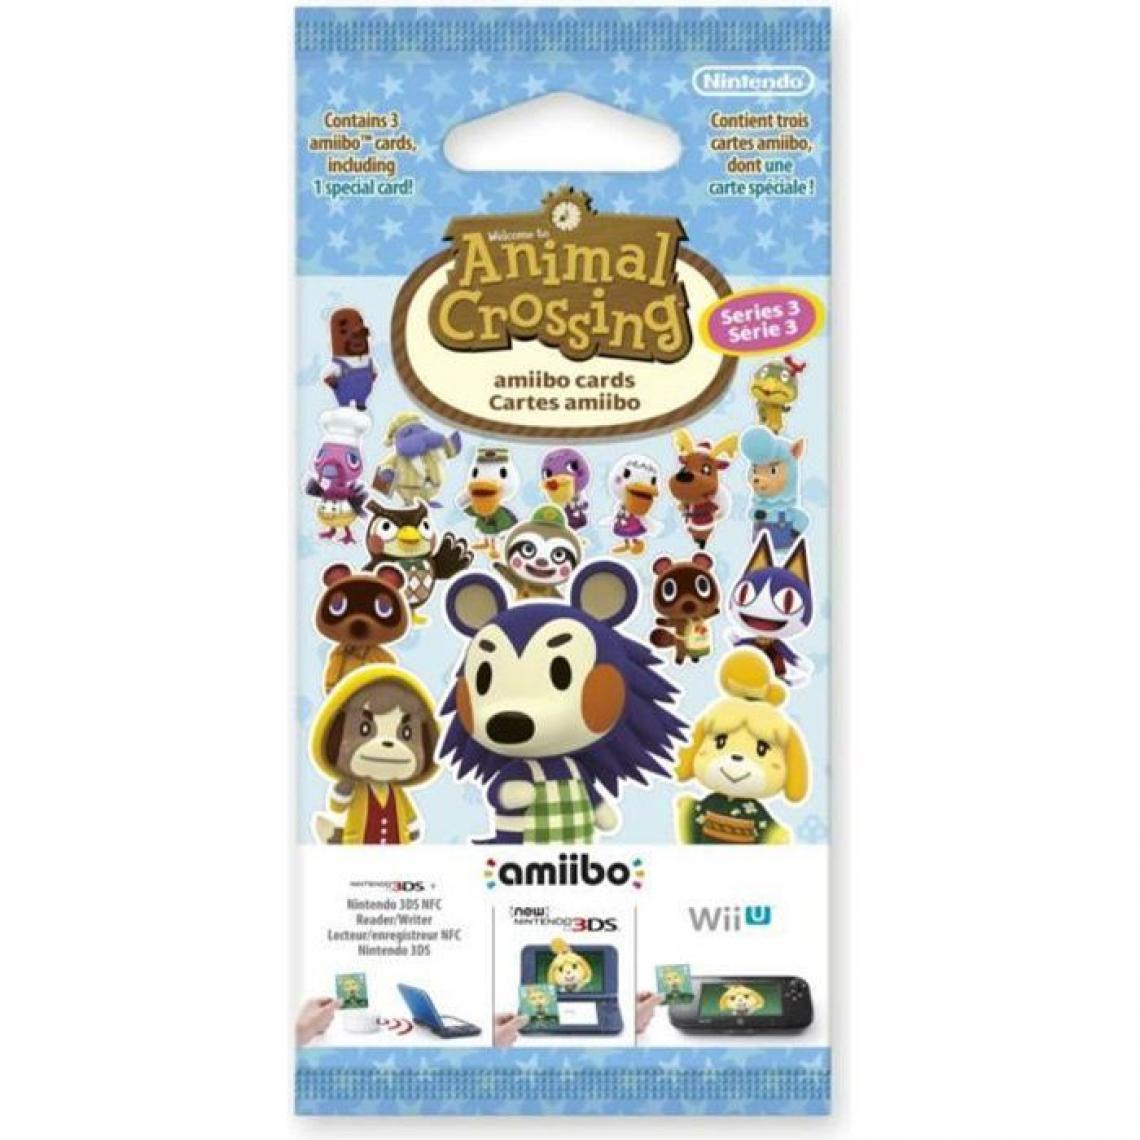 Nintendo - Animal Crossing - Cartes Amiibo - Série 3 (paquet de 3 cartes dont 1 spéciale) - Joystick